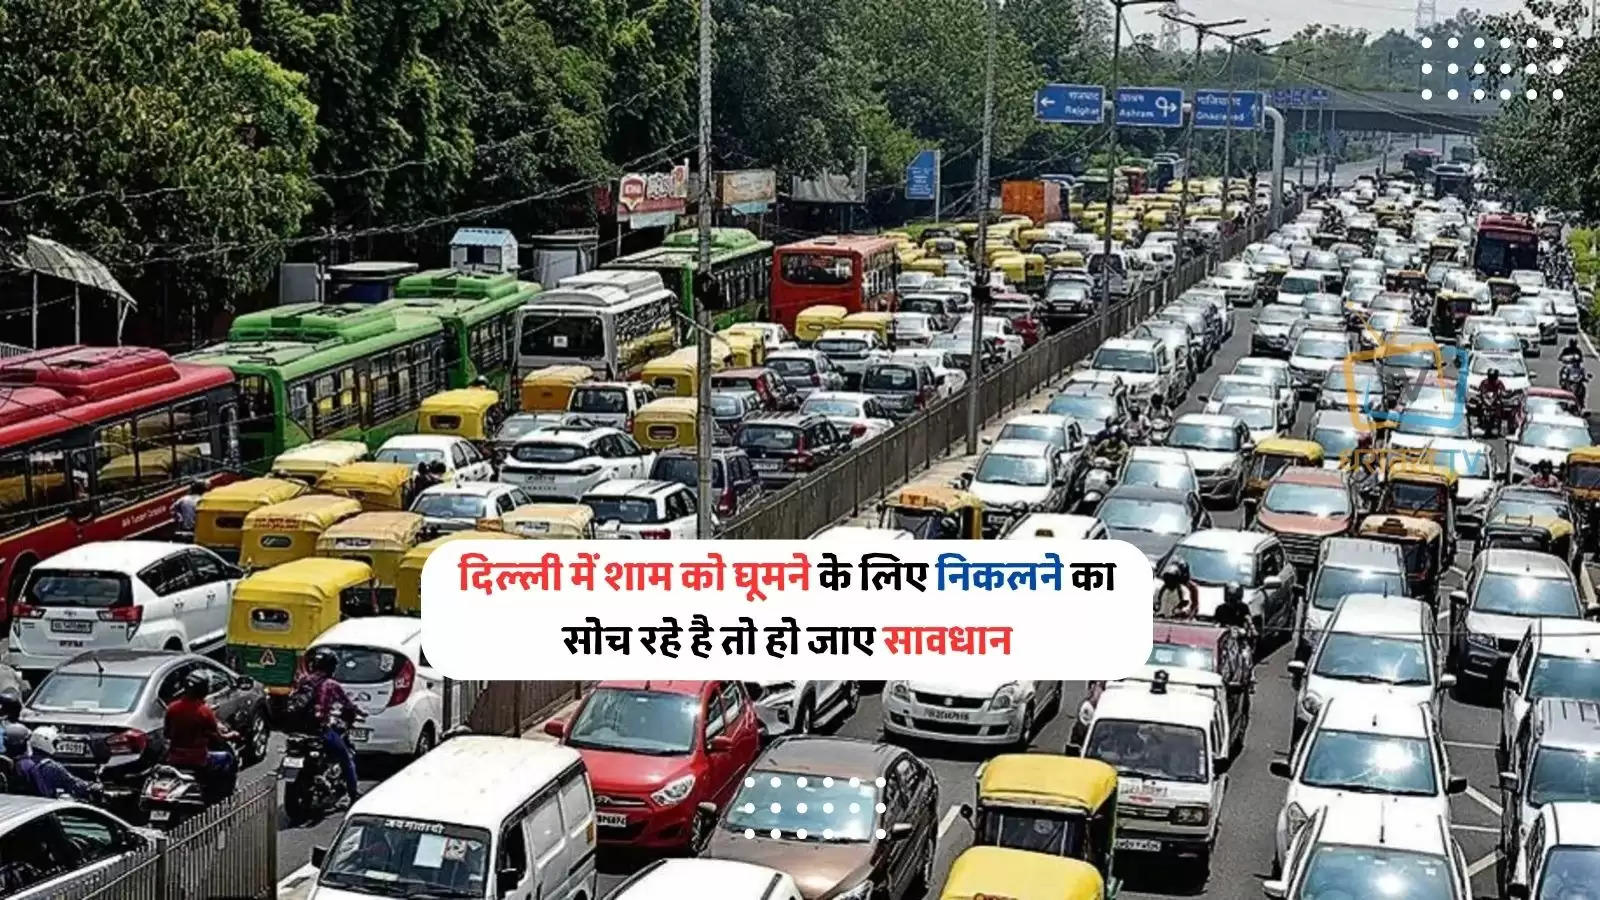 traffic jam problem in delhi today 